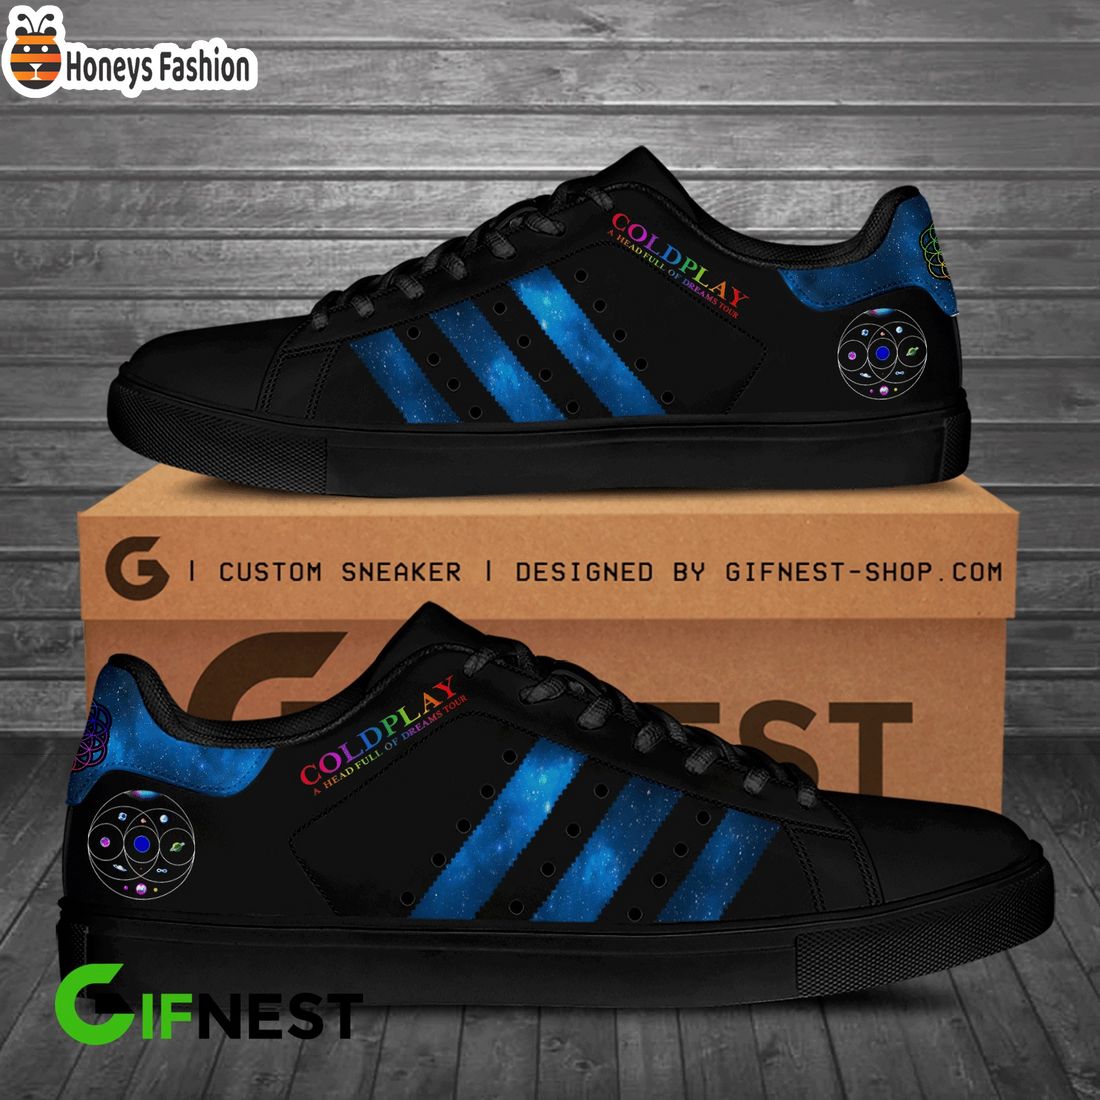 Coldplay x LGBT black stan smith adidas shoes